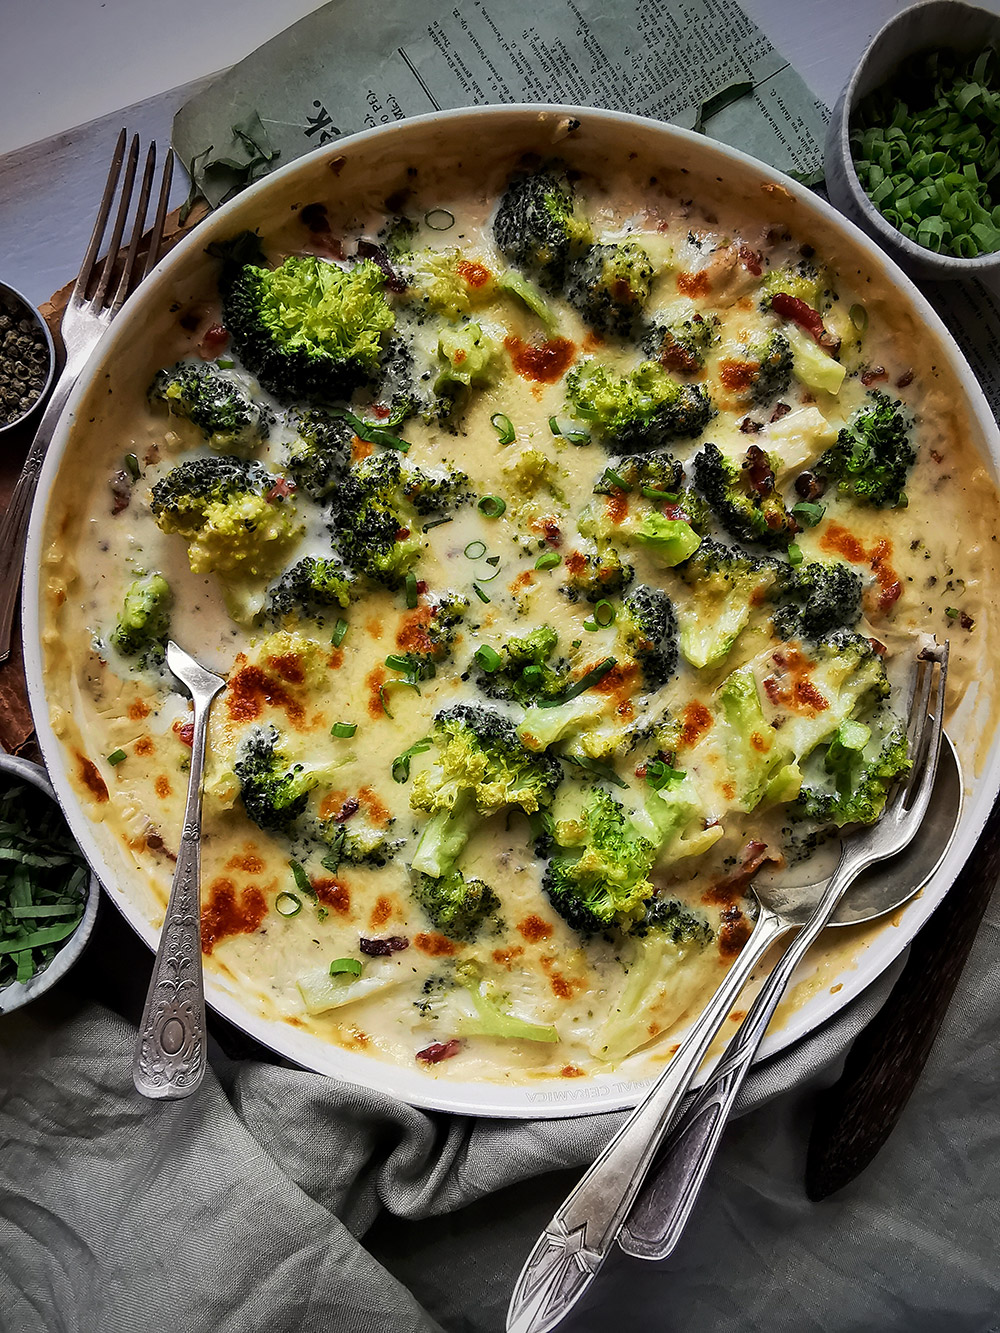 Creamy broccoli